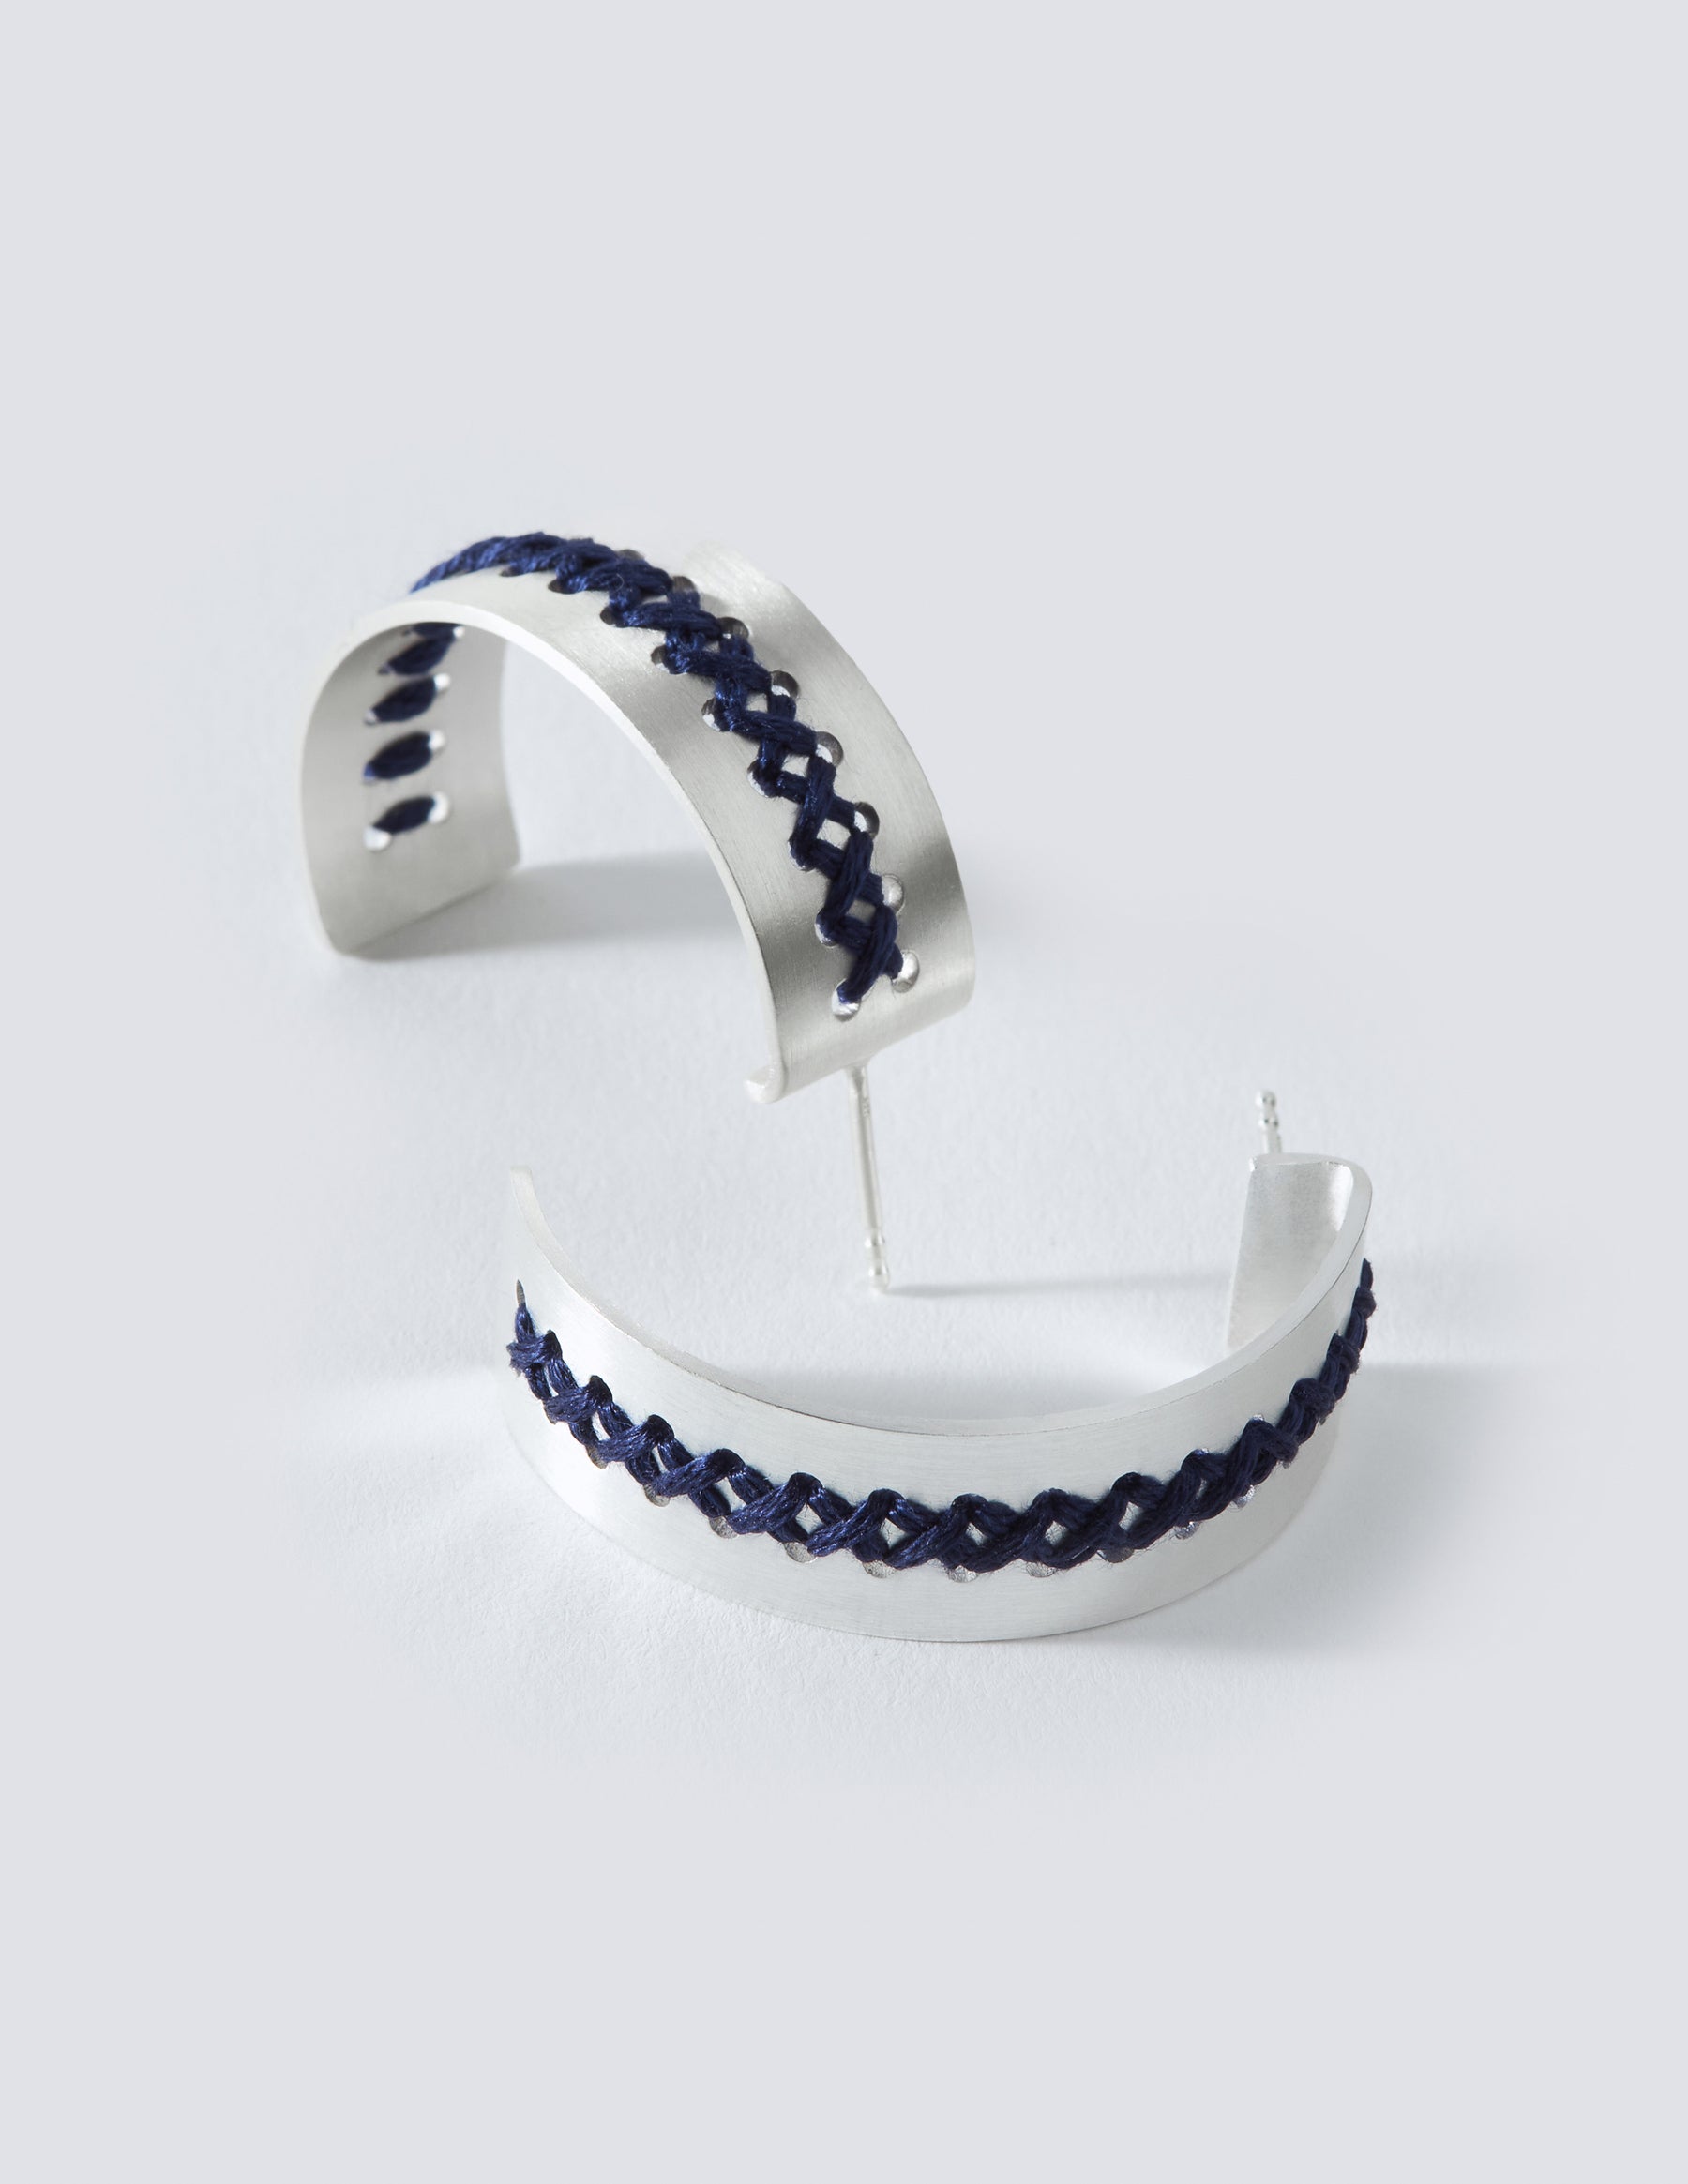 Hera Silver Hoop Earrings - CHARALAMPIA